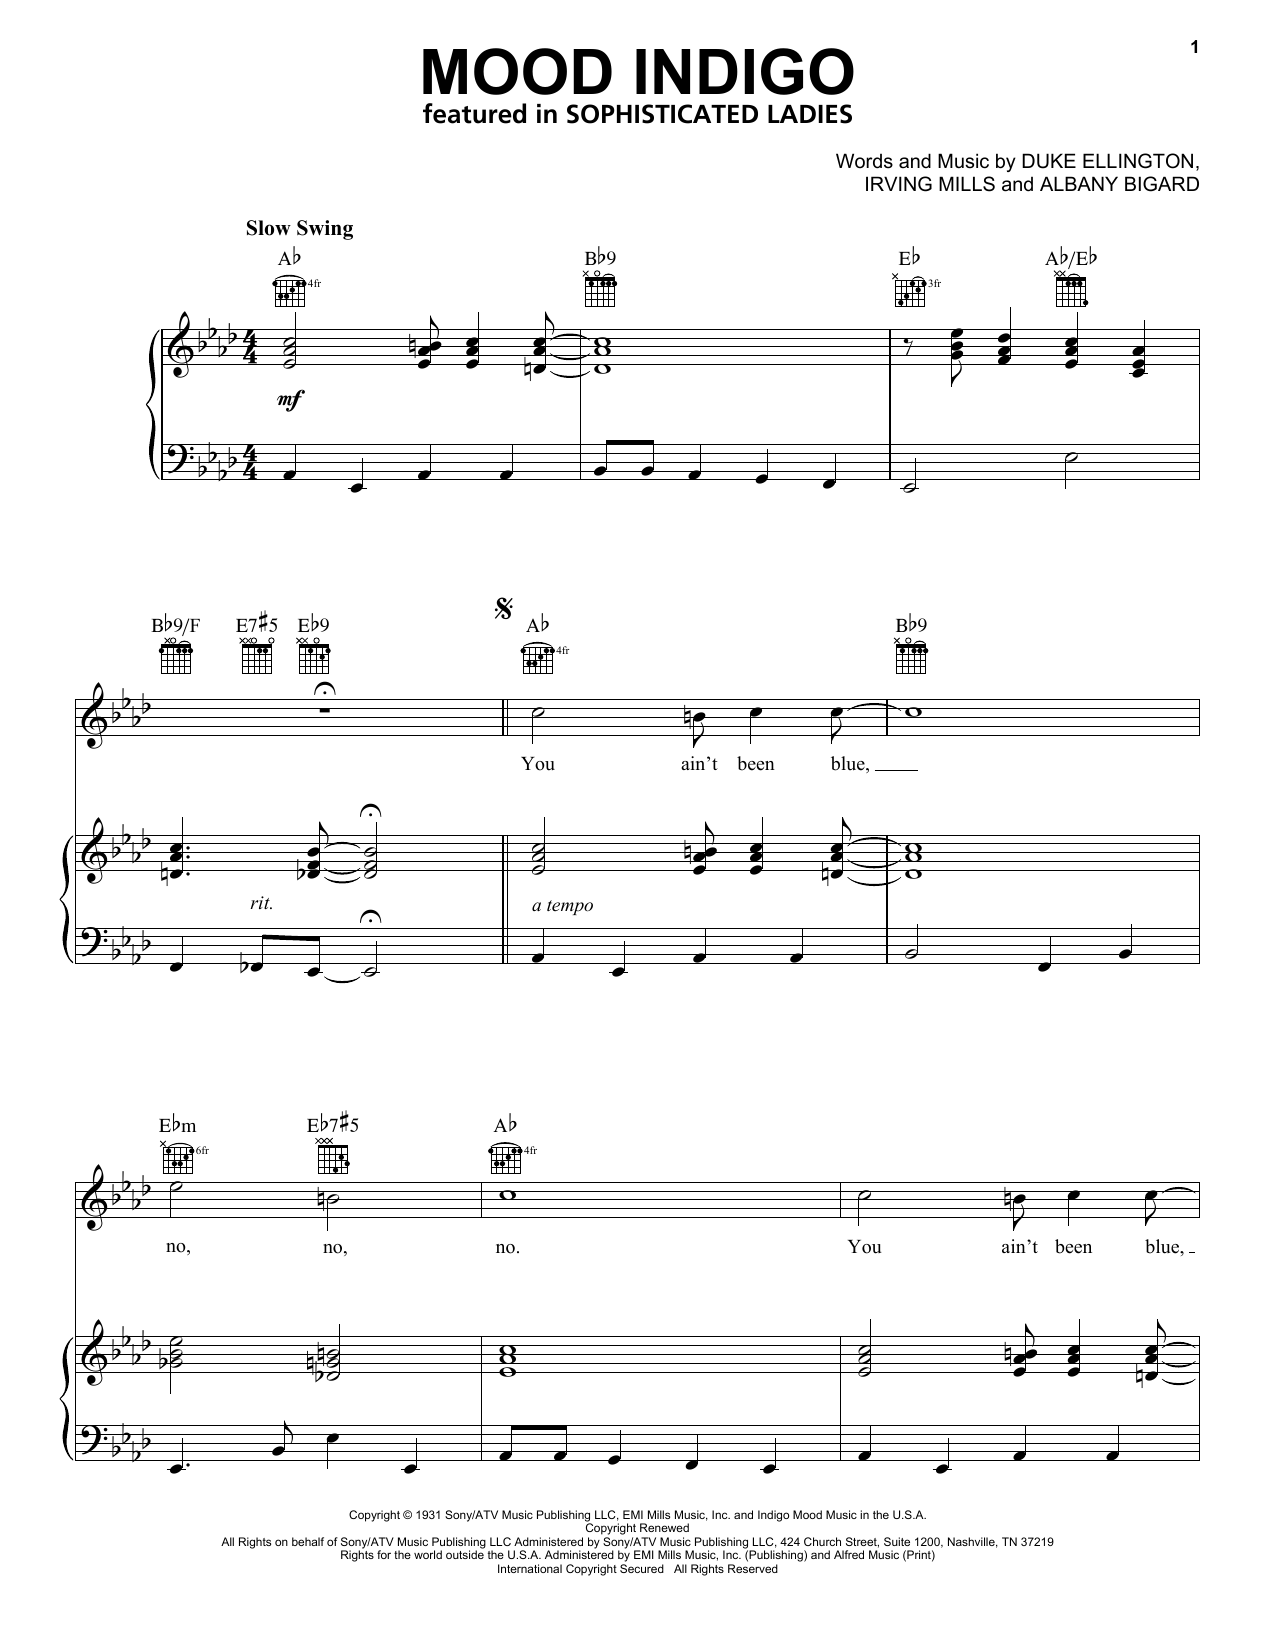 Duke Ellington Mood Indigo Sheet Music Notes & Chords for Ukulele - Download or Print PDF